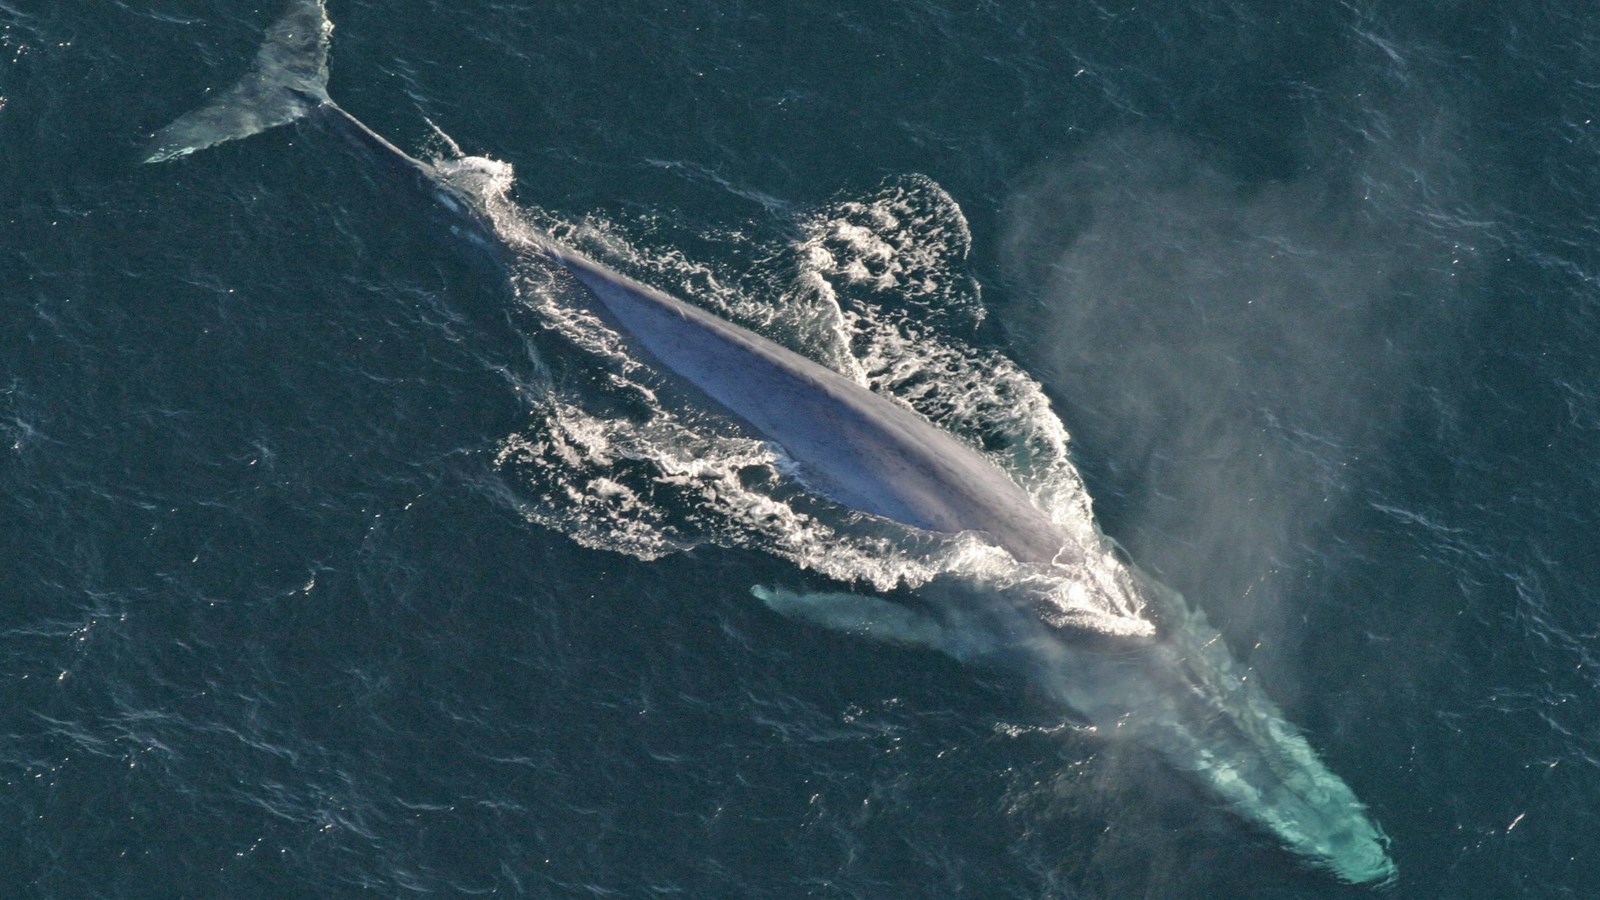 blue whales size